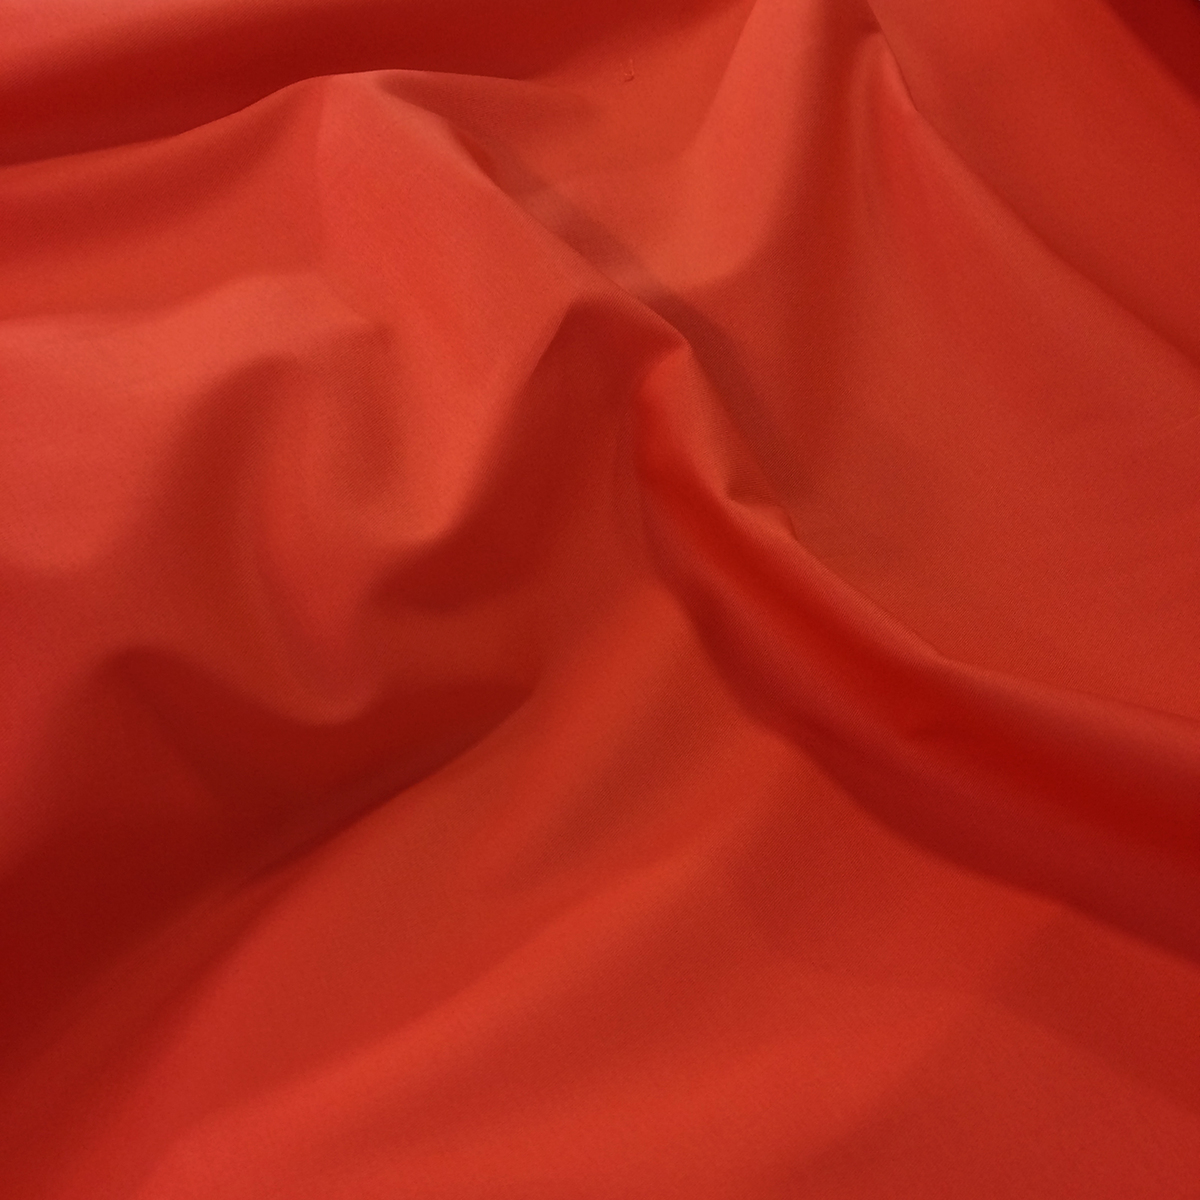 Ярко красный цвет. Алый цвет. Ярко красный цвет ткани. Алый красный цвет. Алый цвет цвет.